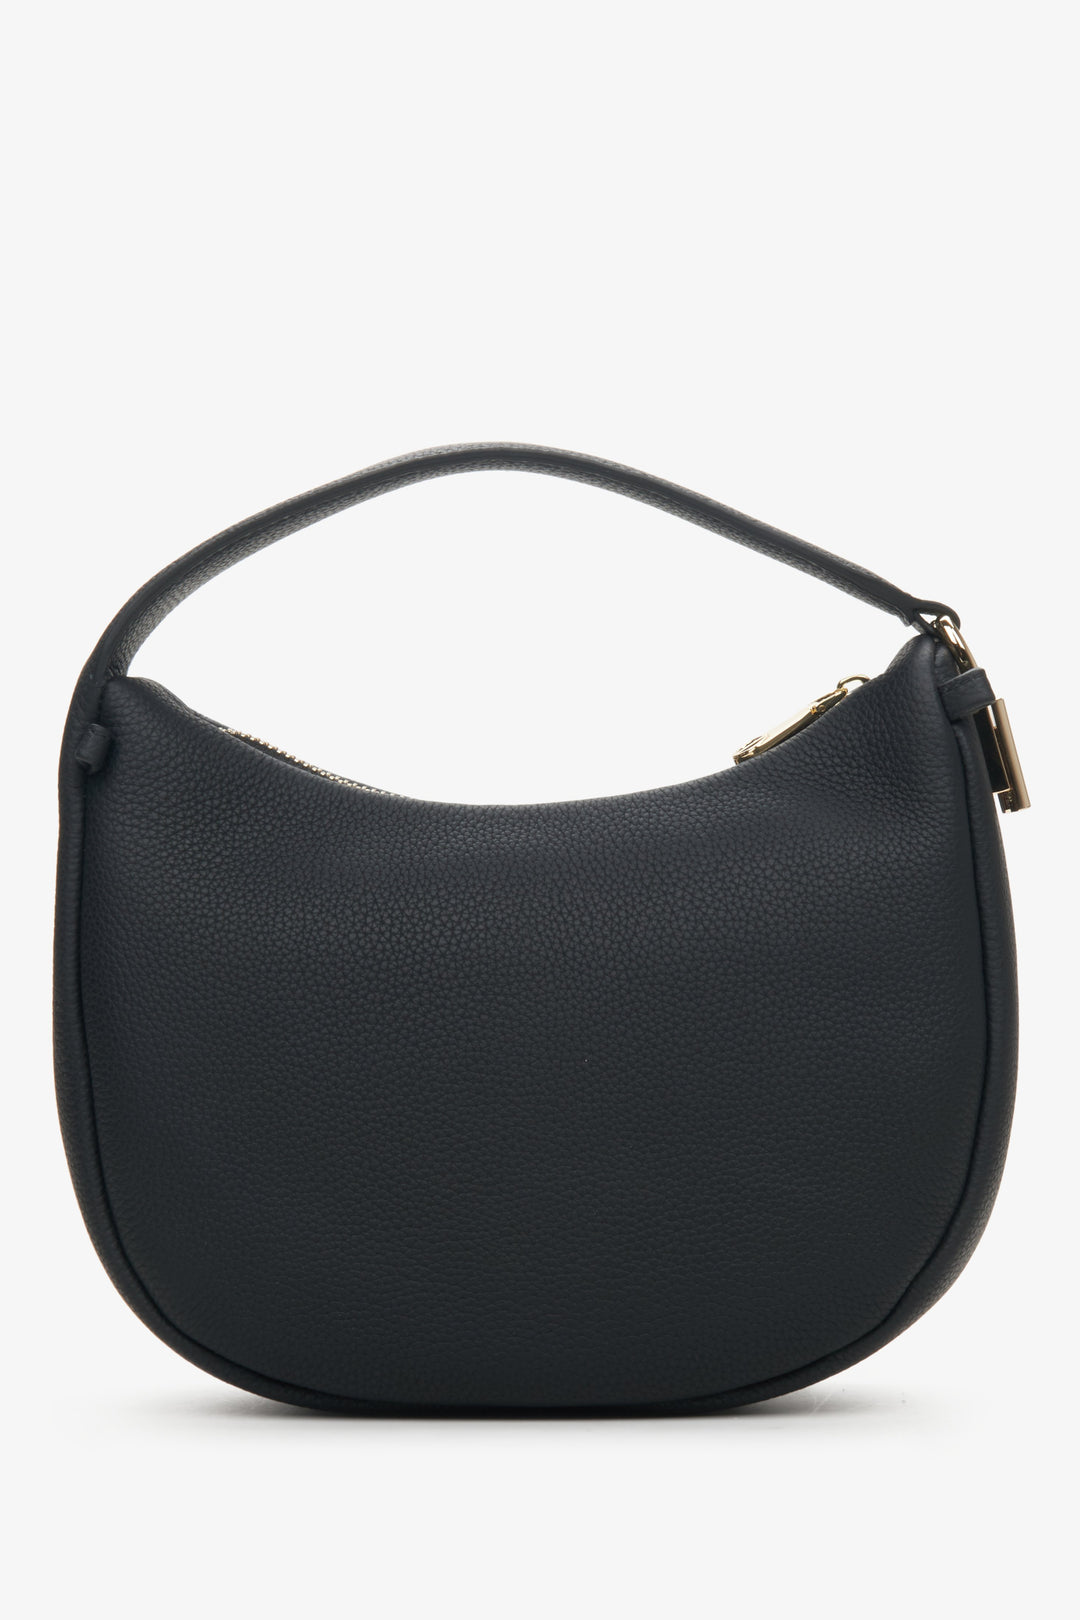 Leather women's crescent-shaped handbag by Estro in black color.